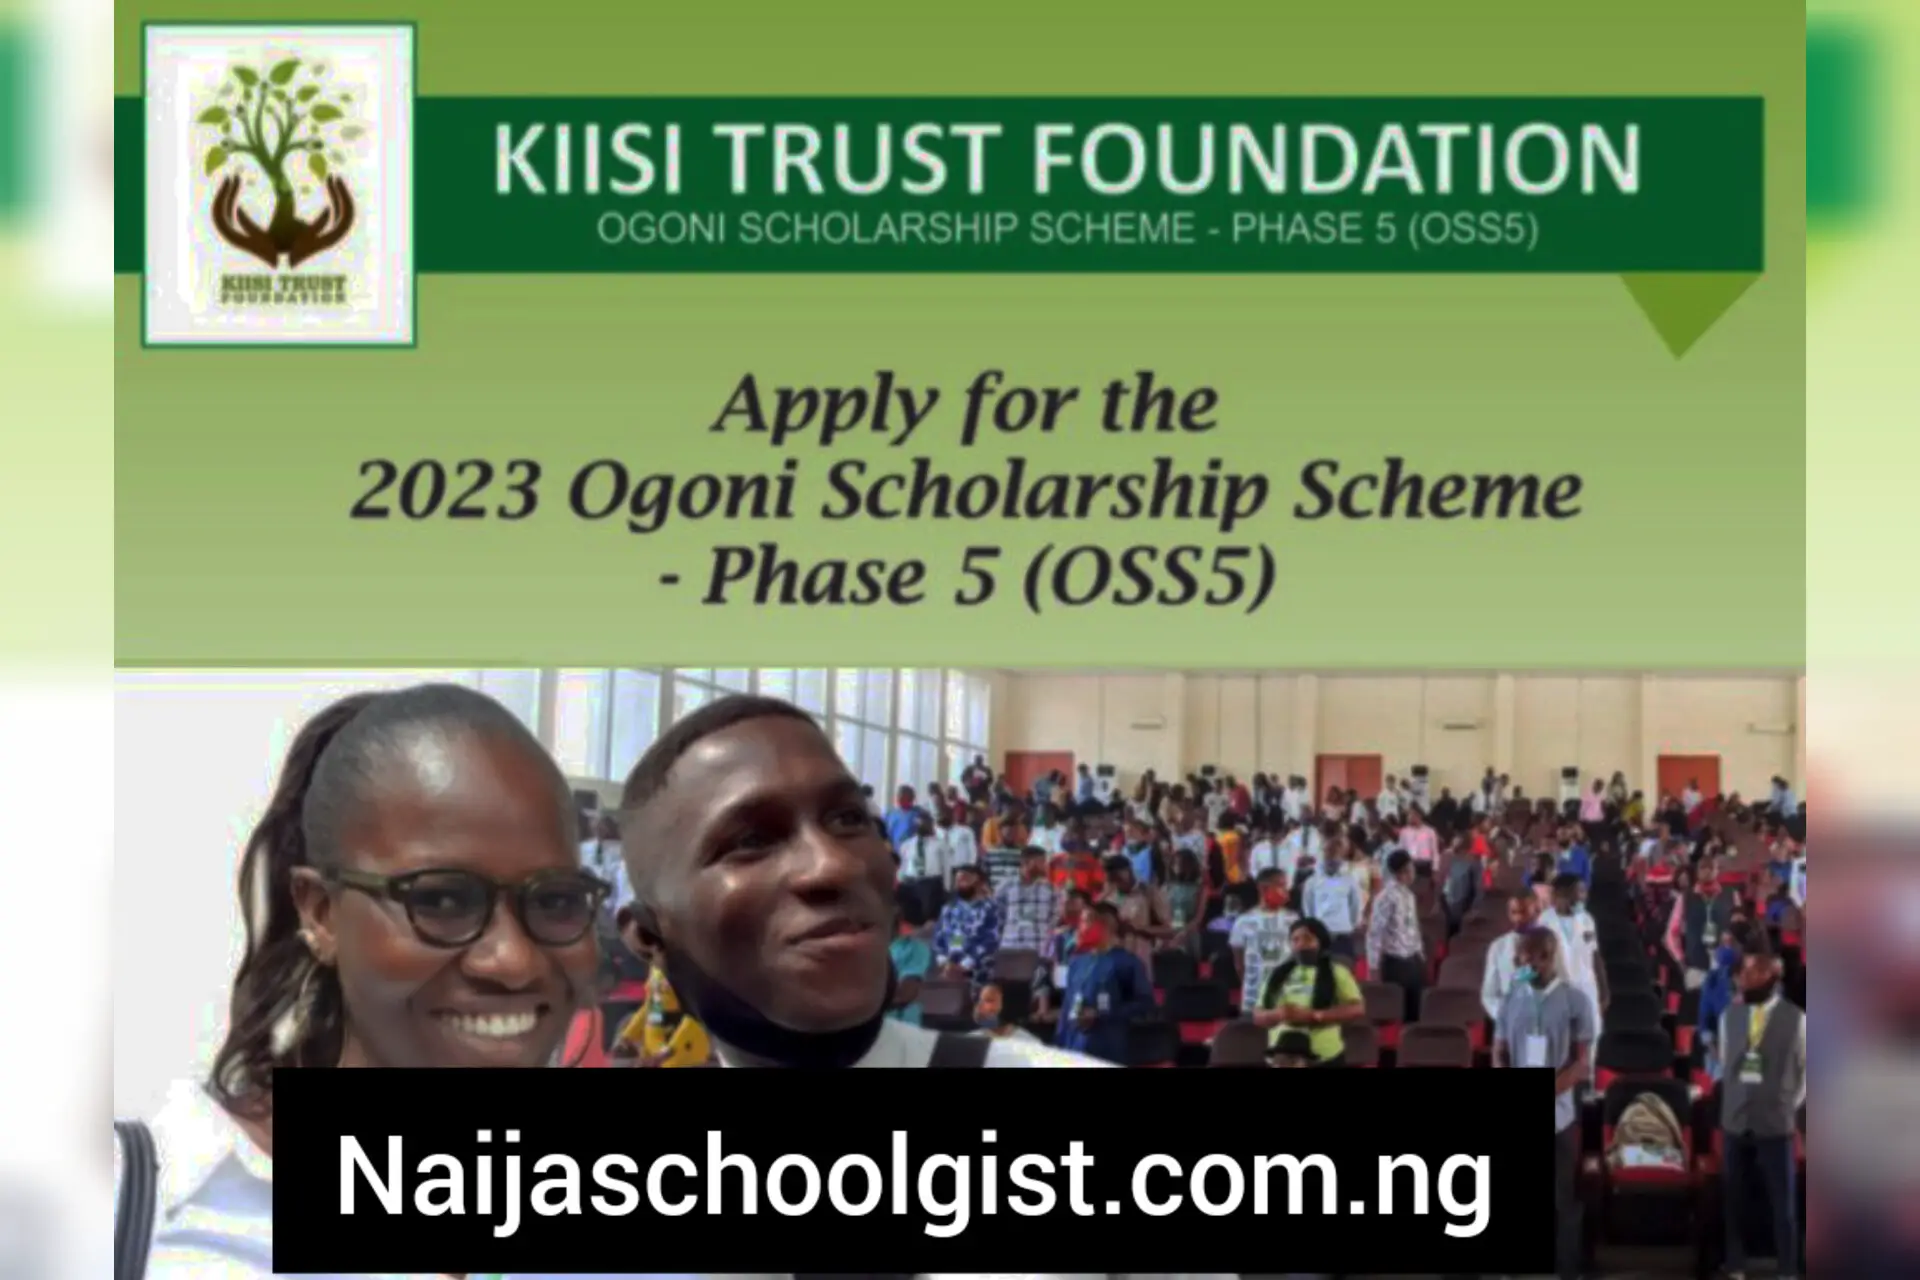 Kiisi Trust Foundation - Ogoni Scholarship Scheme 2023